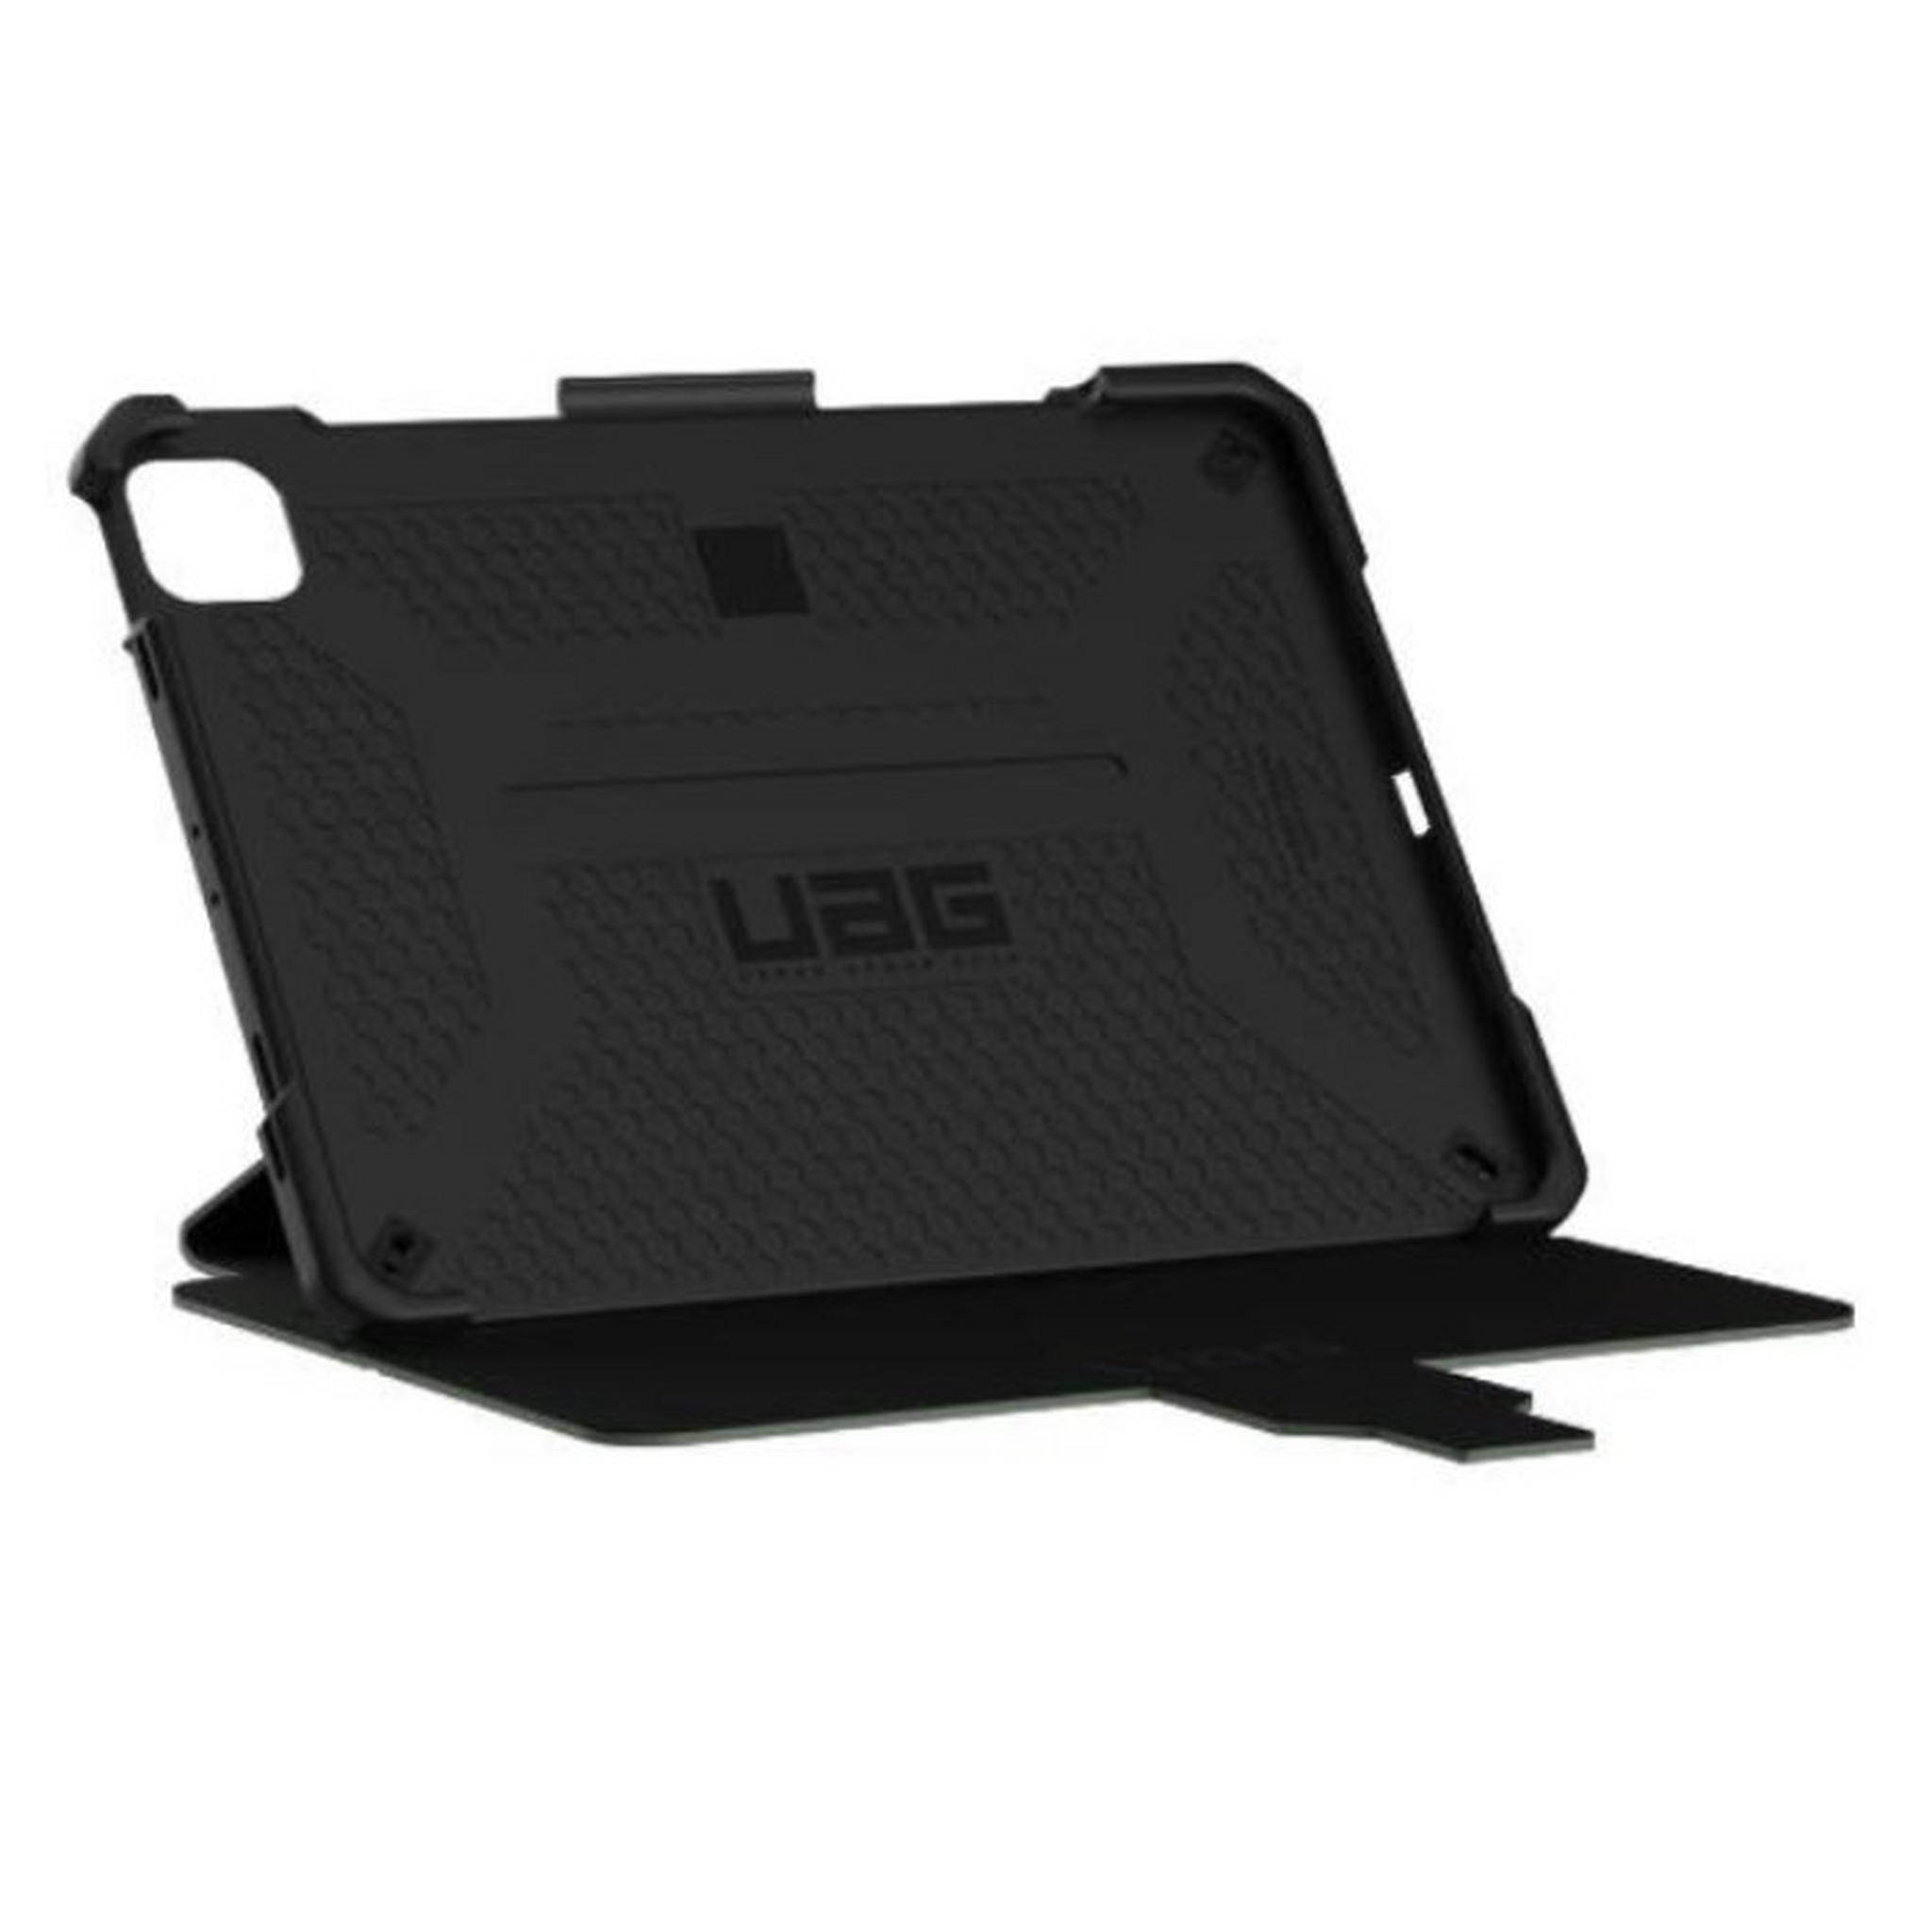 UAG Metropolis SE Case for iPad Air 10.9-inch / iPad Pro 11-inch - Olive